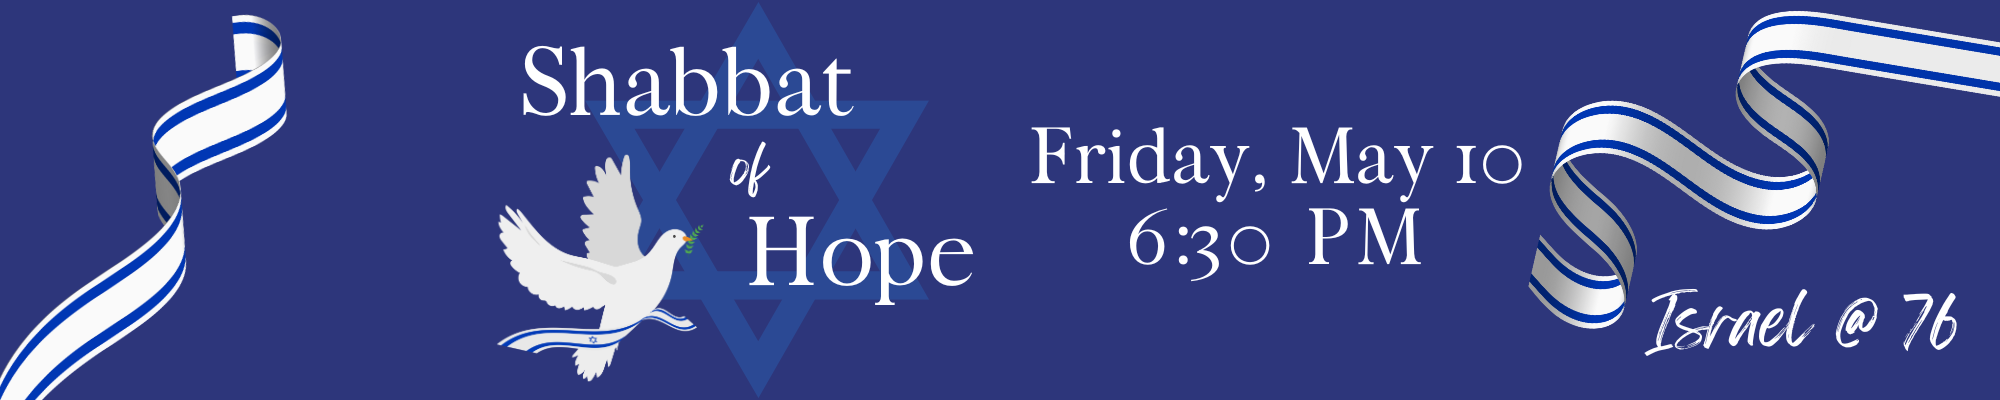 Shabbat of Hope